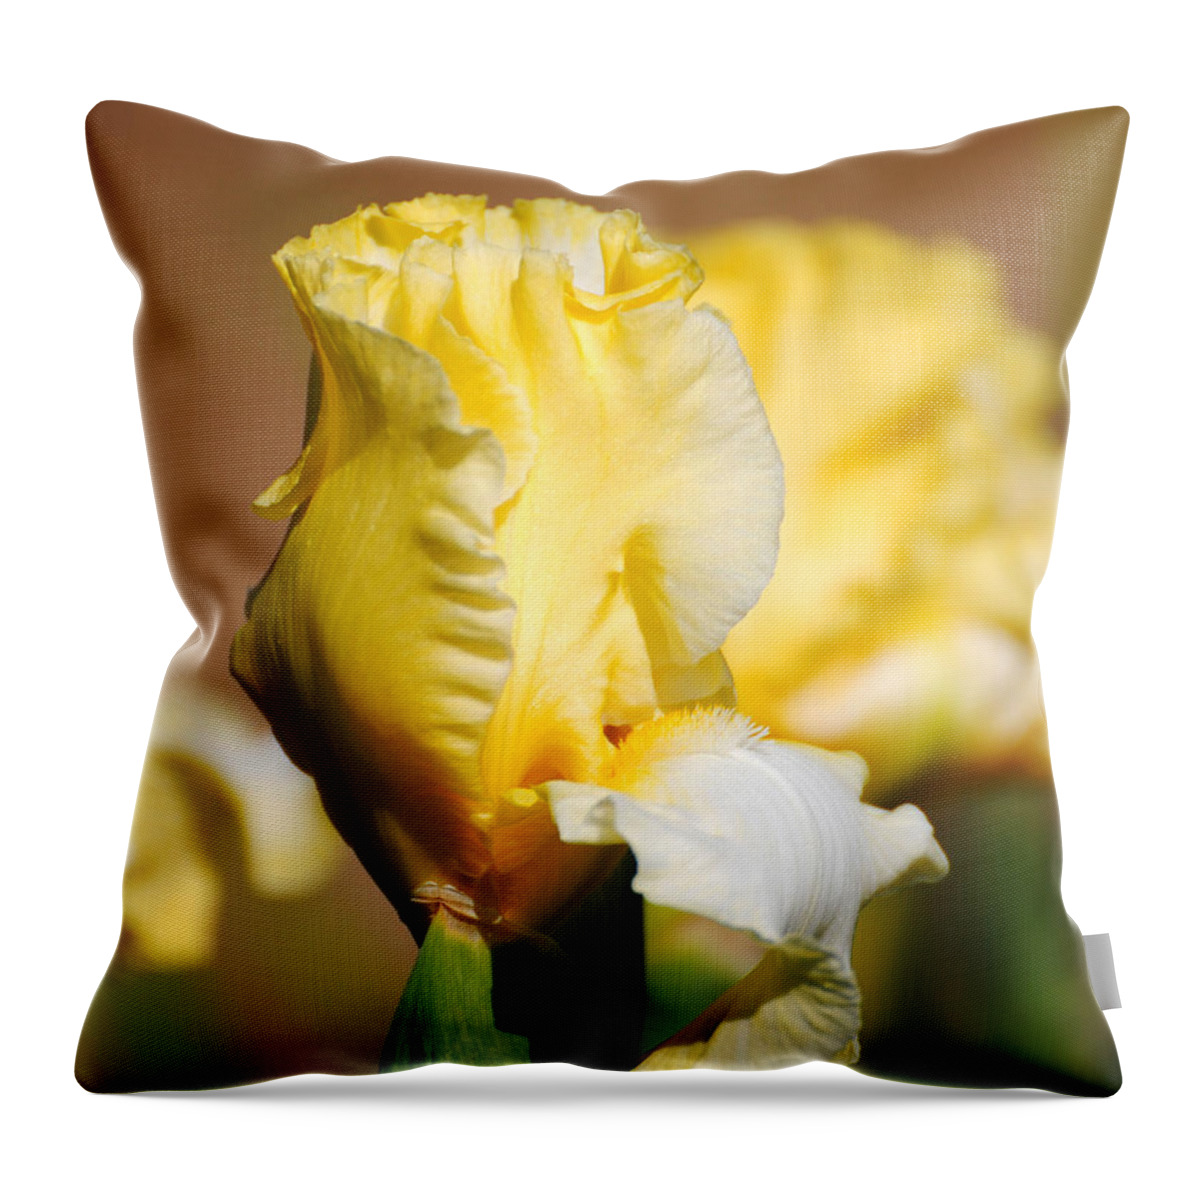 Beautiful Iris Throw Pillow featuring the photograph Yellow and White Iris by Jai Johnson